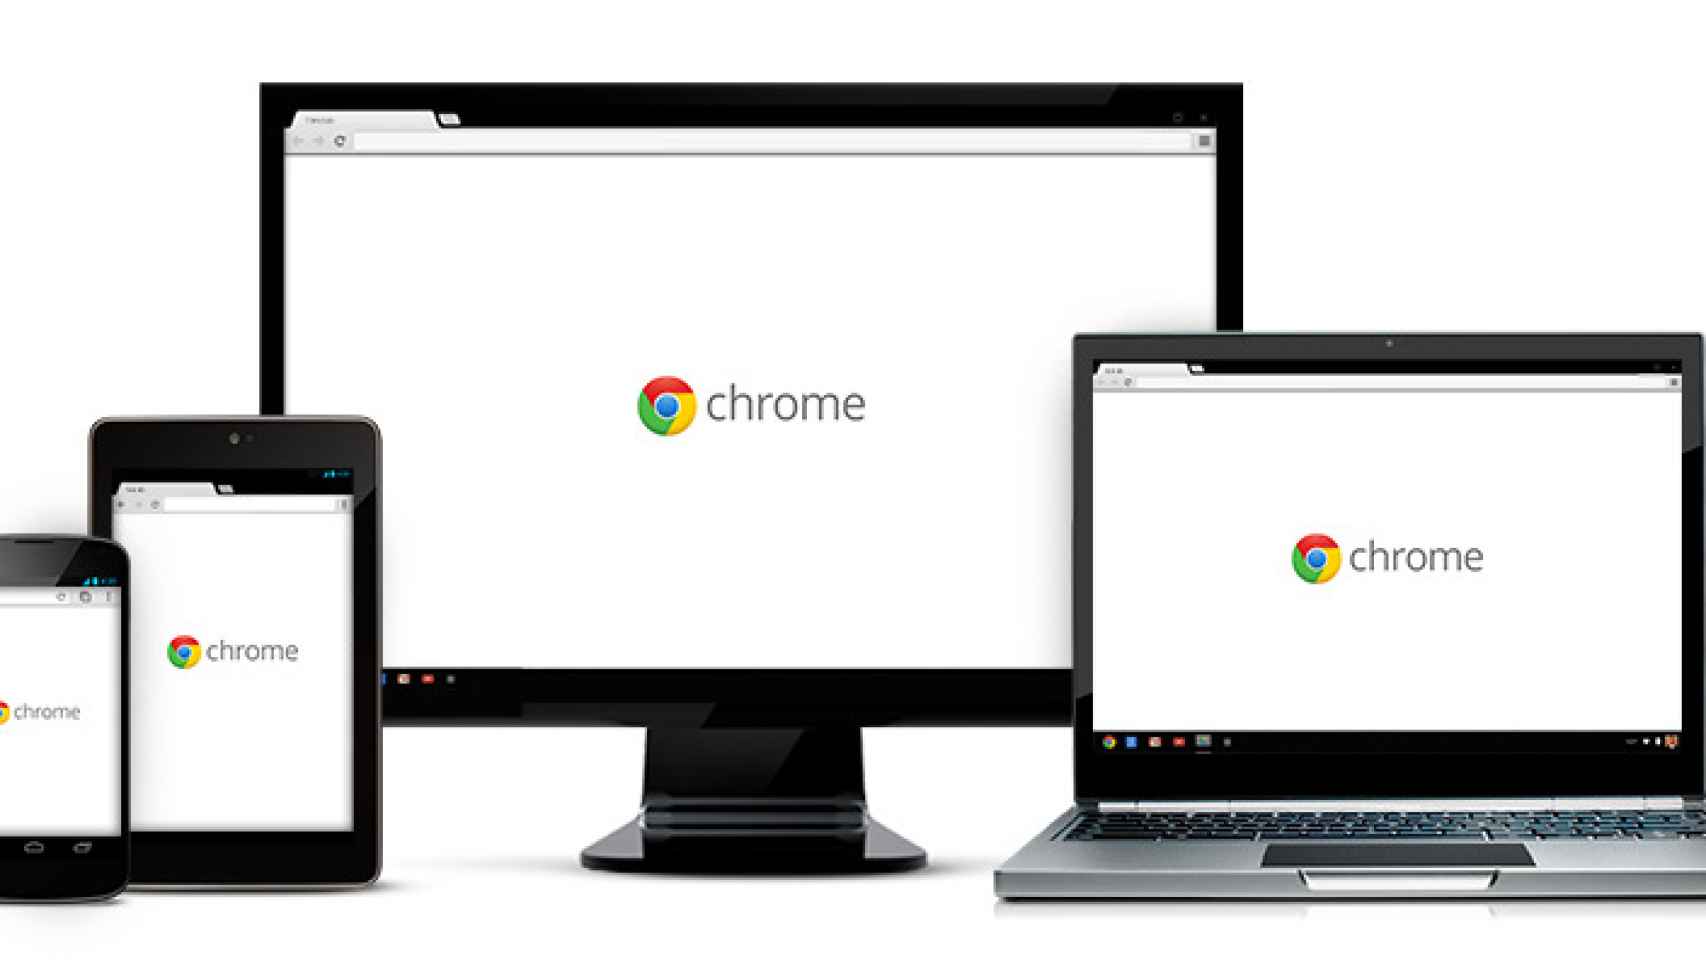 Download also. Загрузки Chrome. Google Chrome установить. Google Chrome 2014.